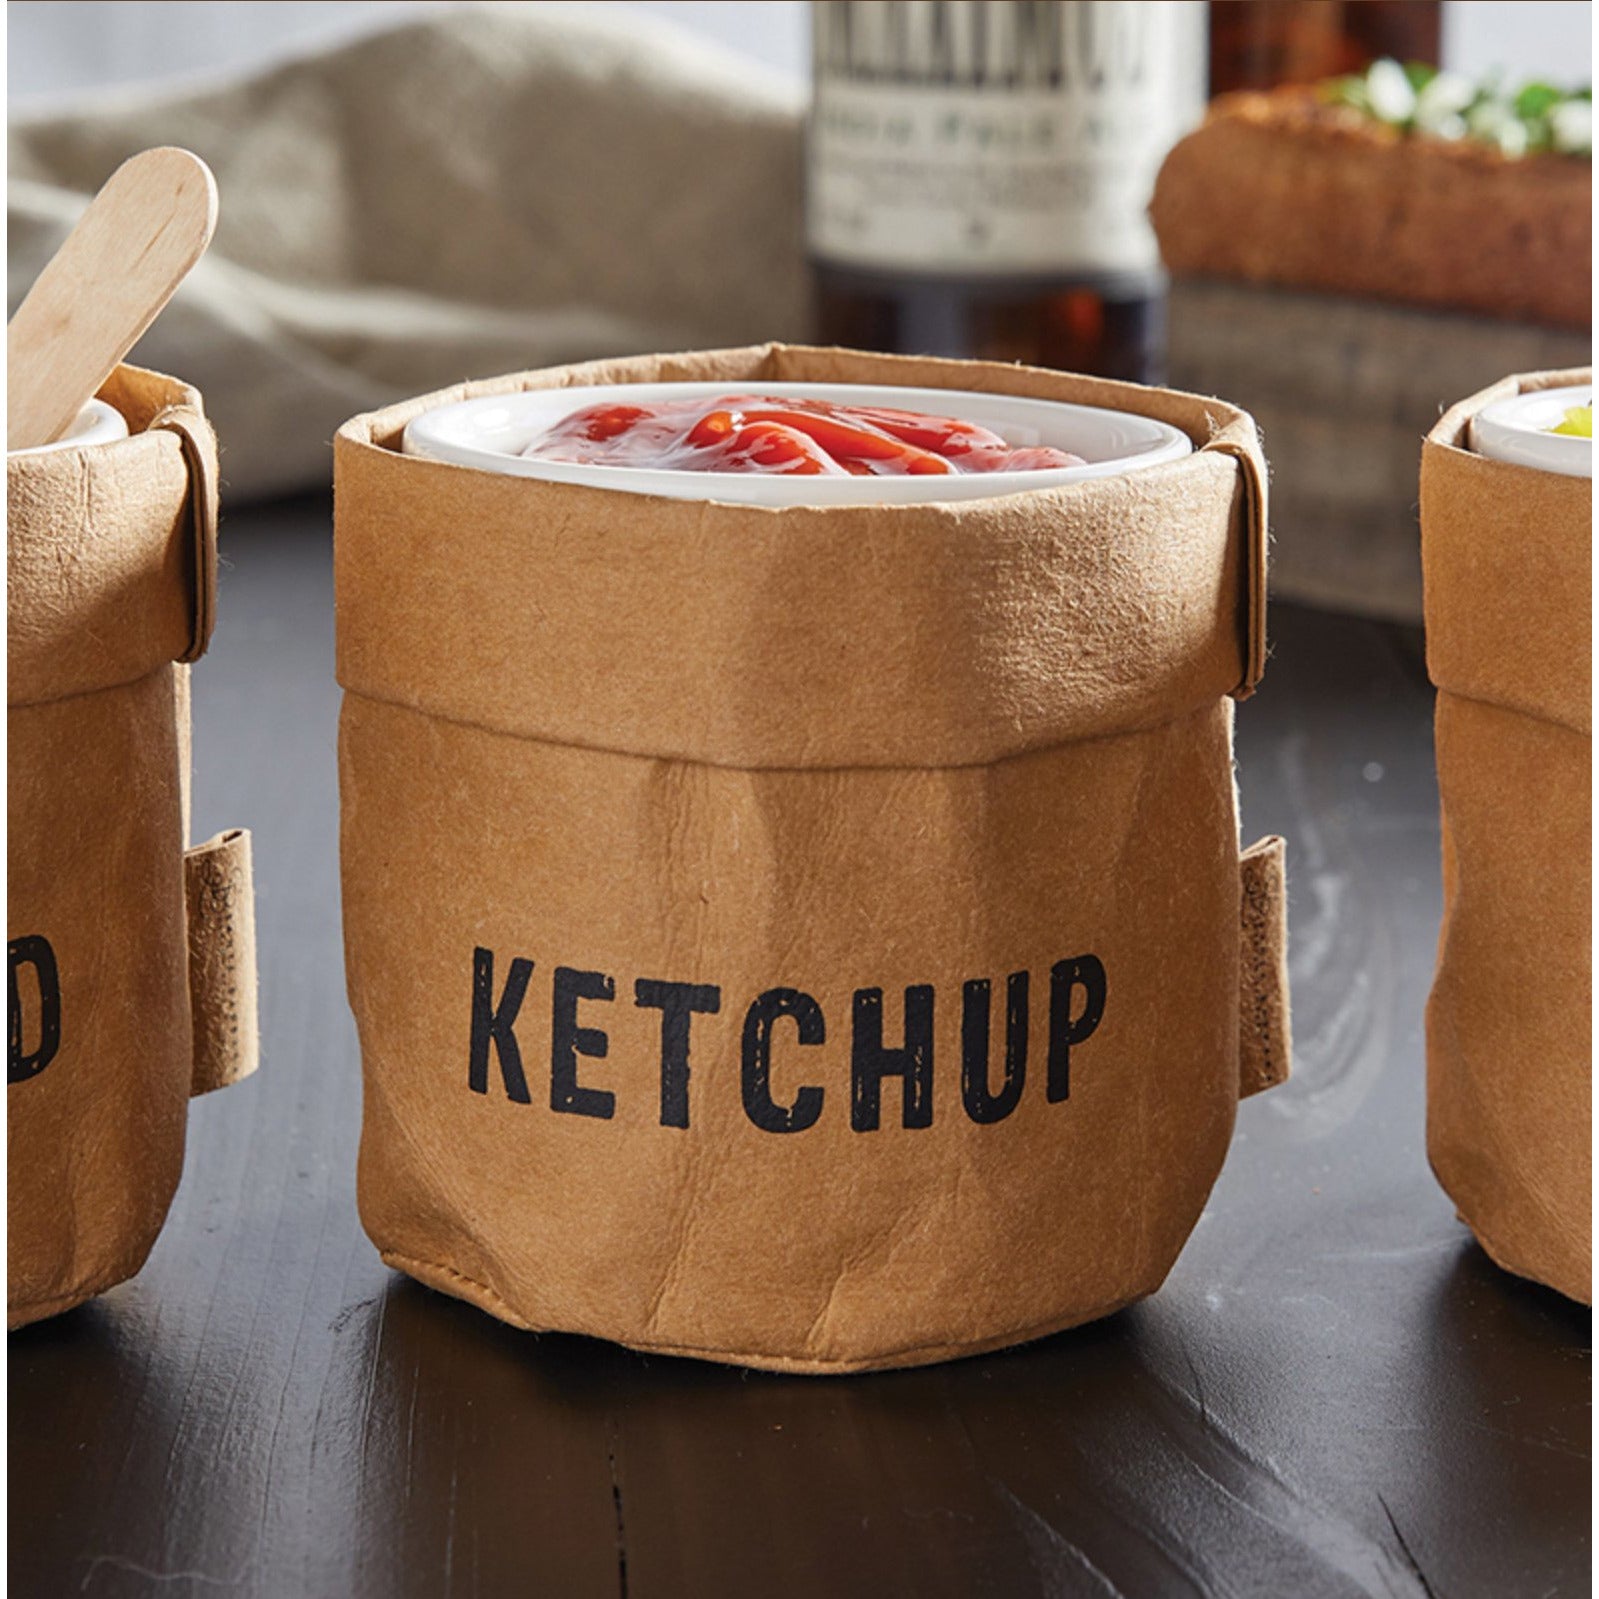 washable paper holder & ceramic dish set - ketchup